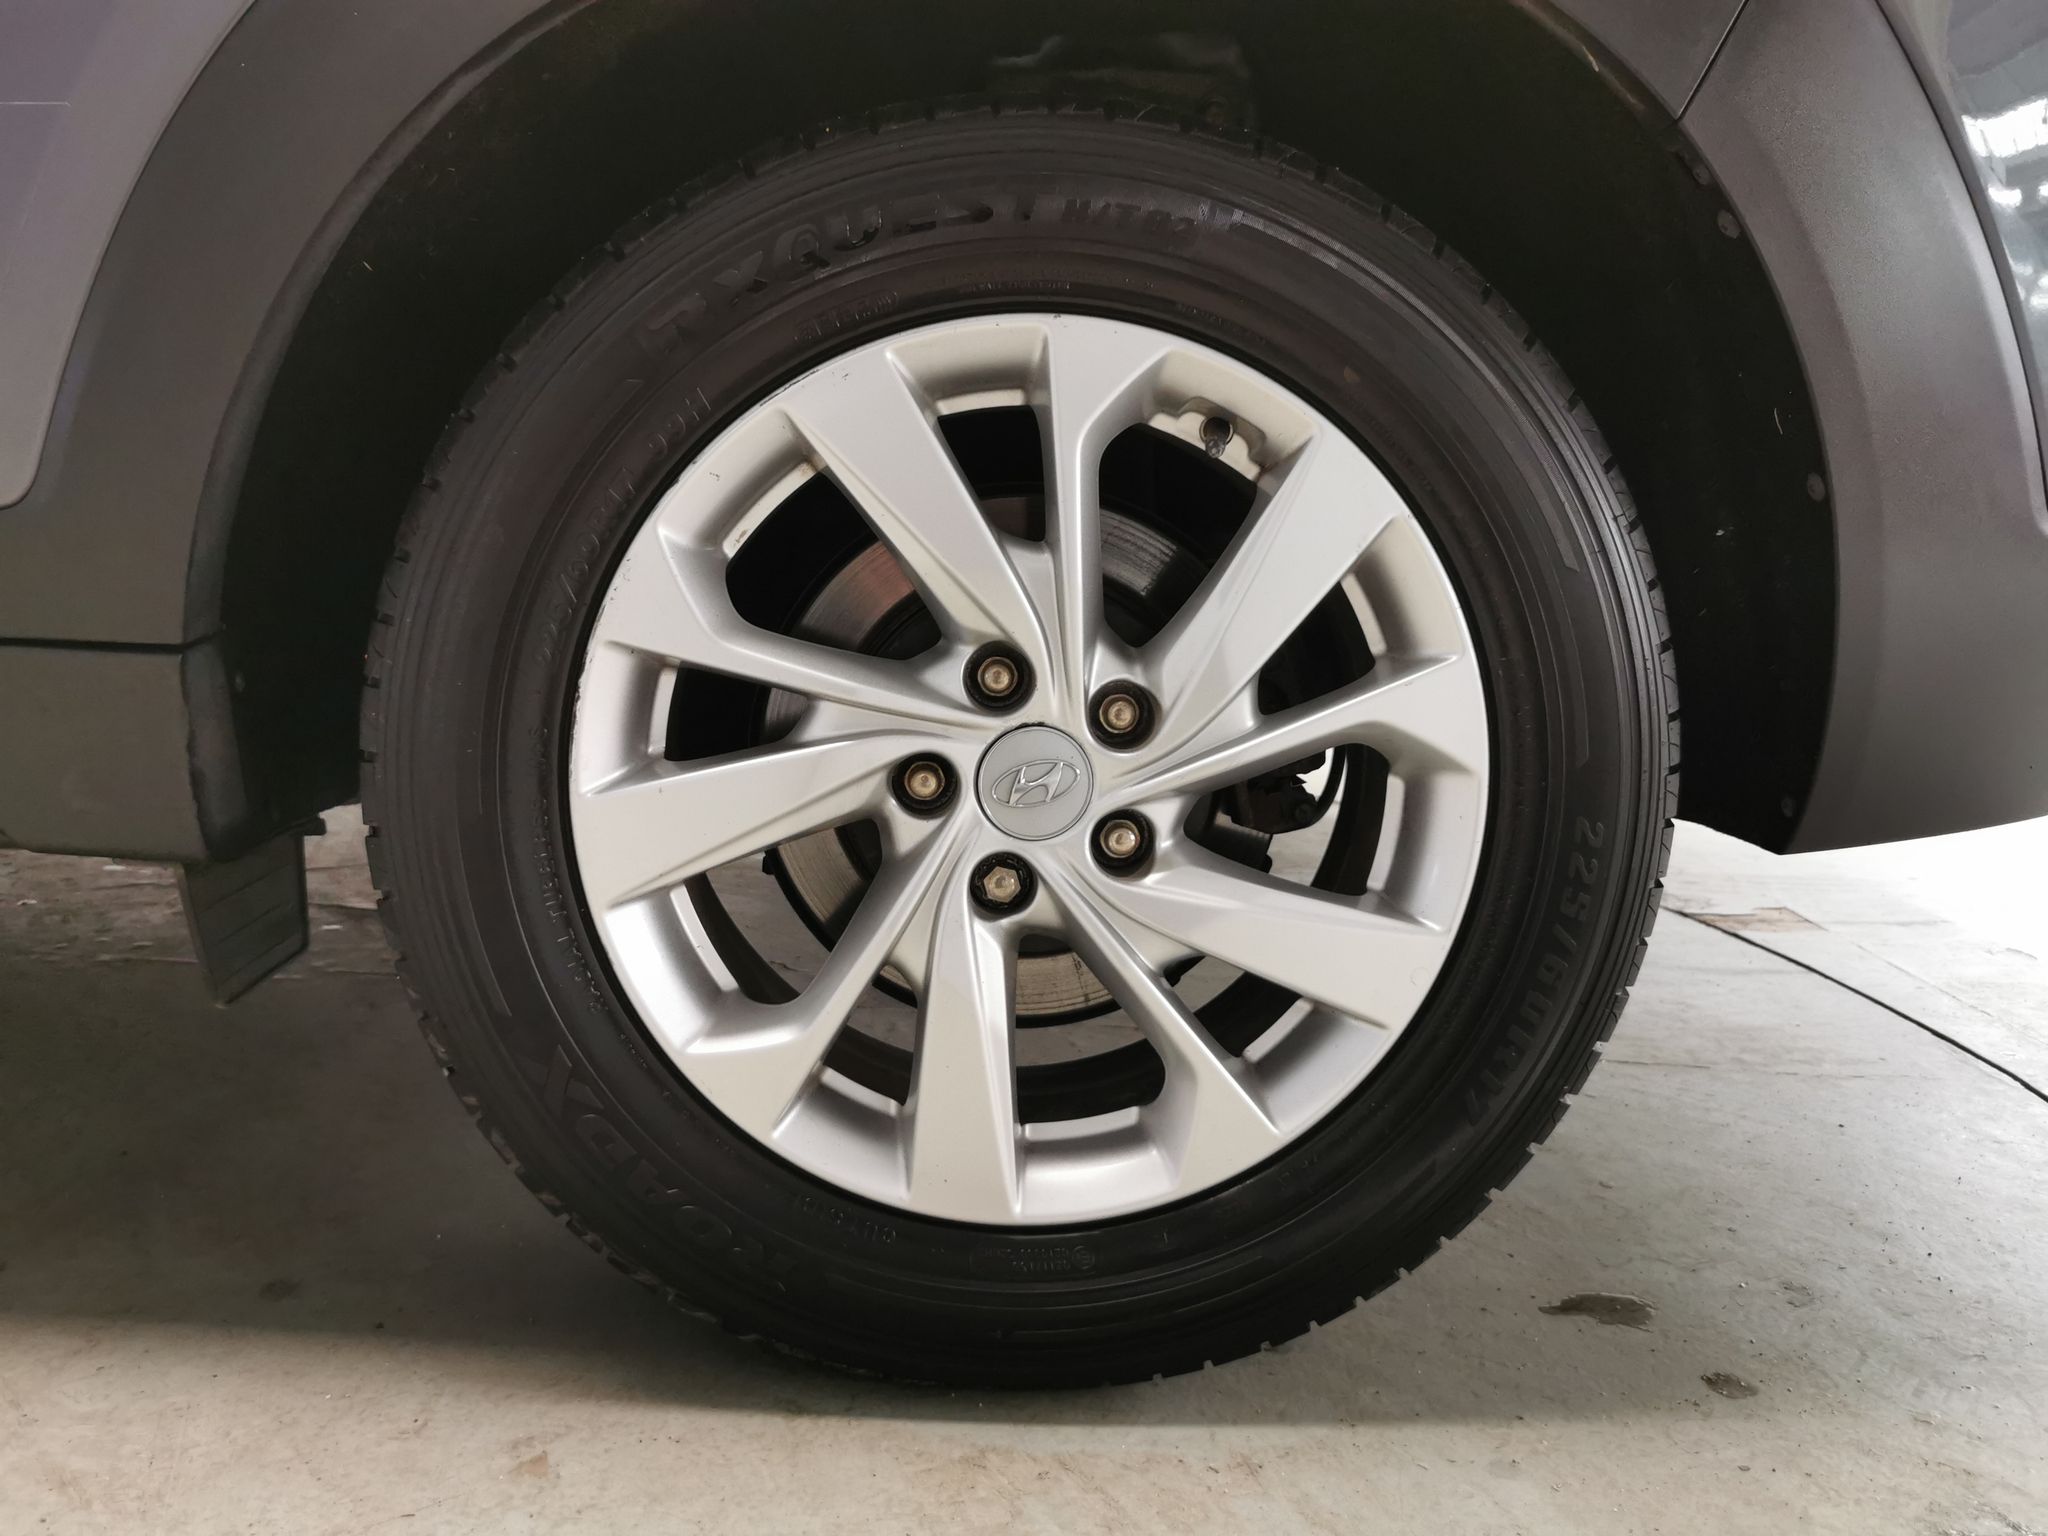 2019 used Hyundai Tucson 1.6 GDi SE Nav (132 ps)